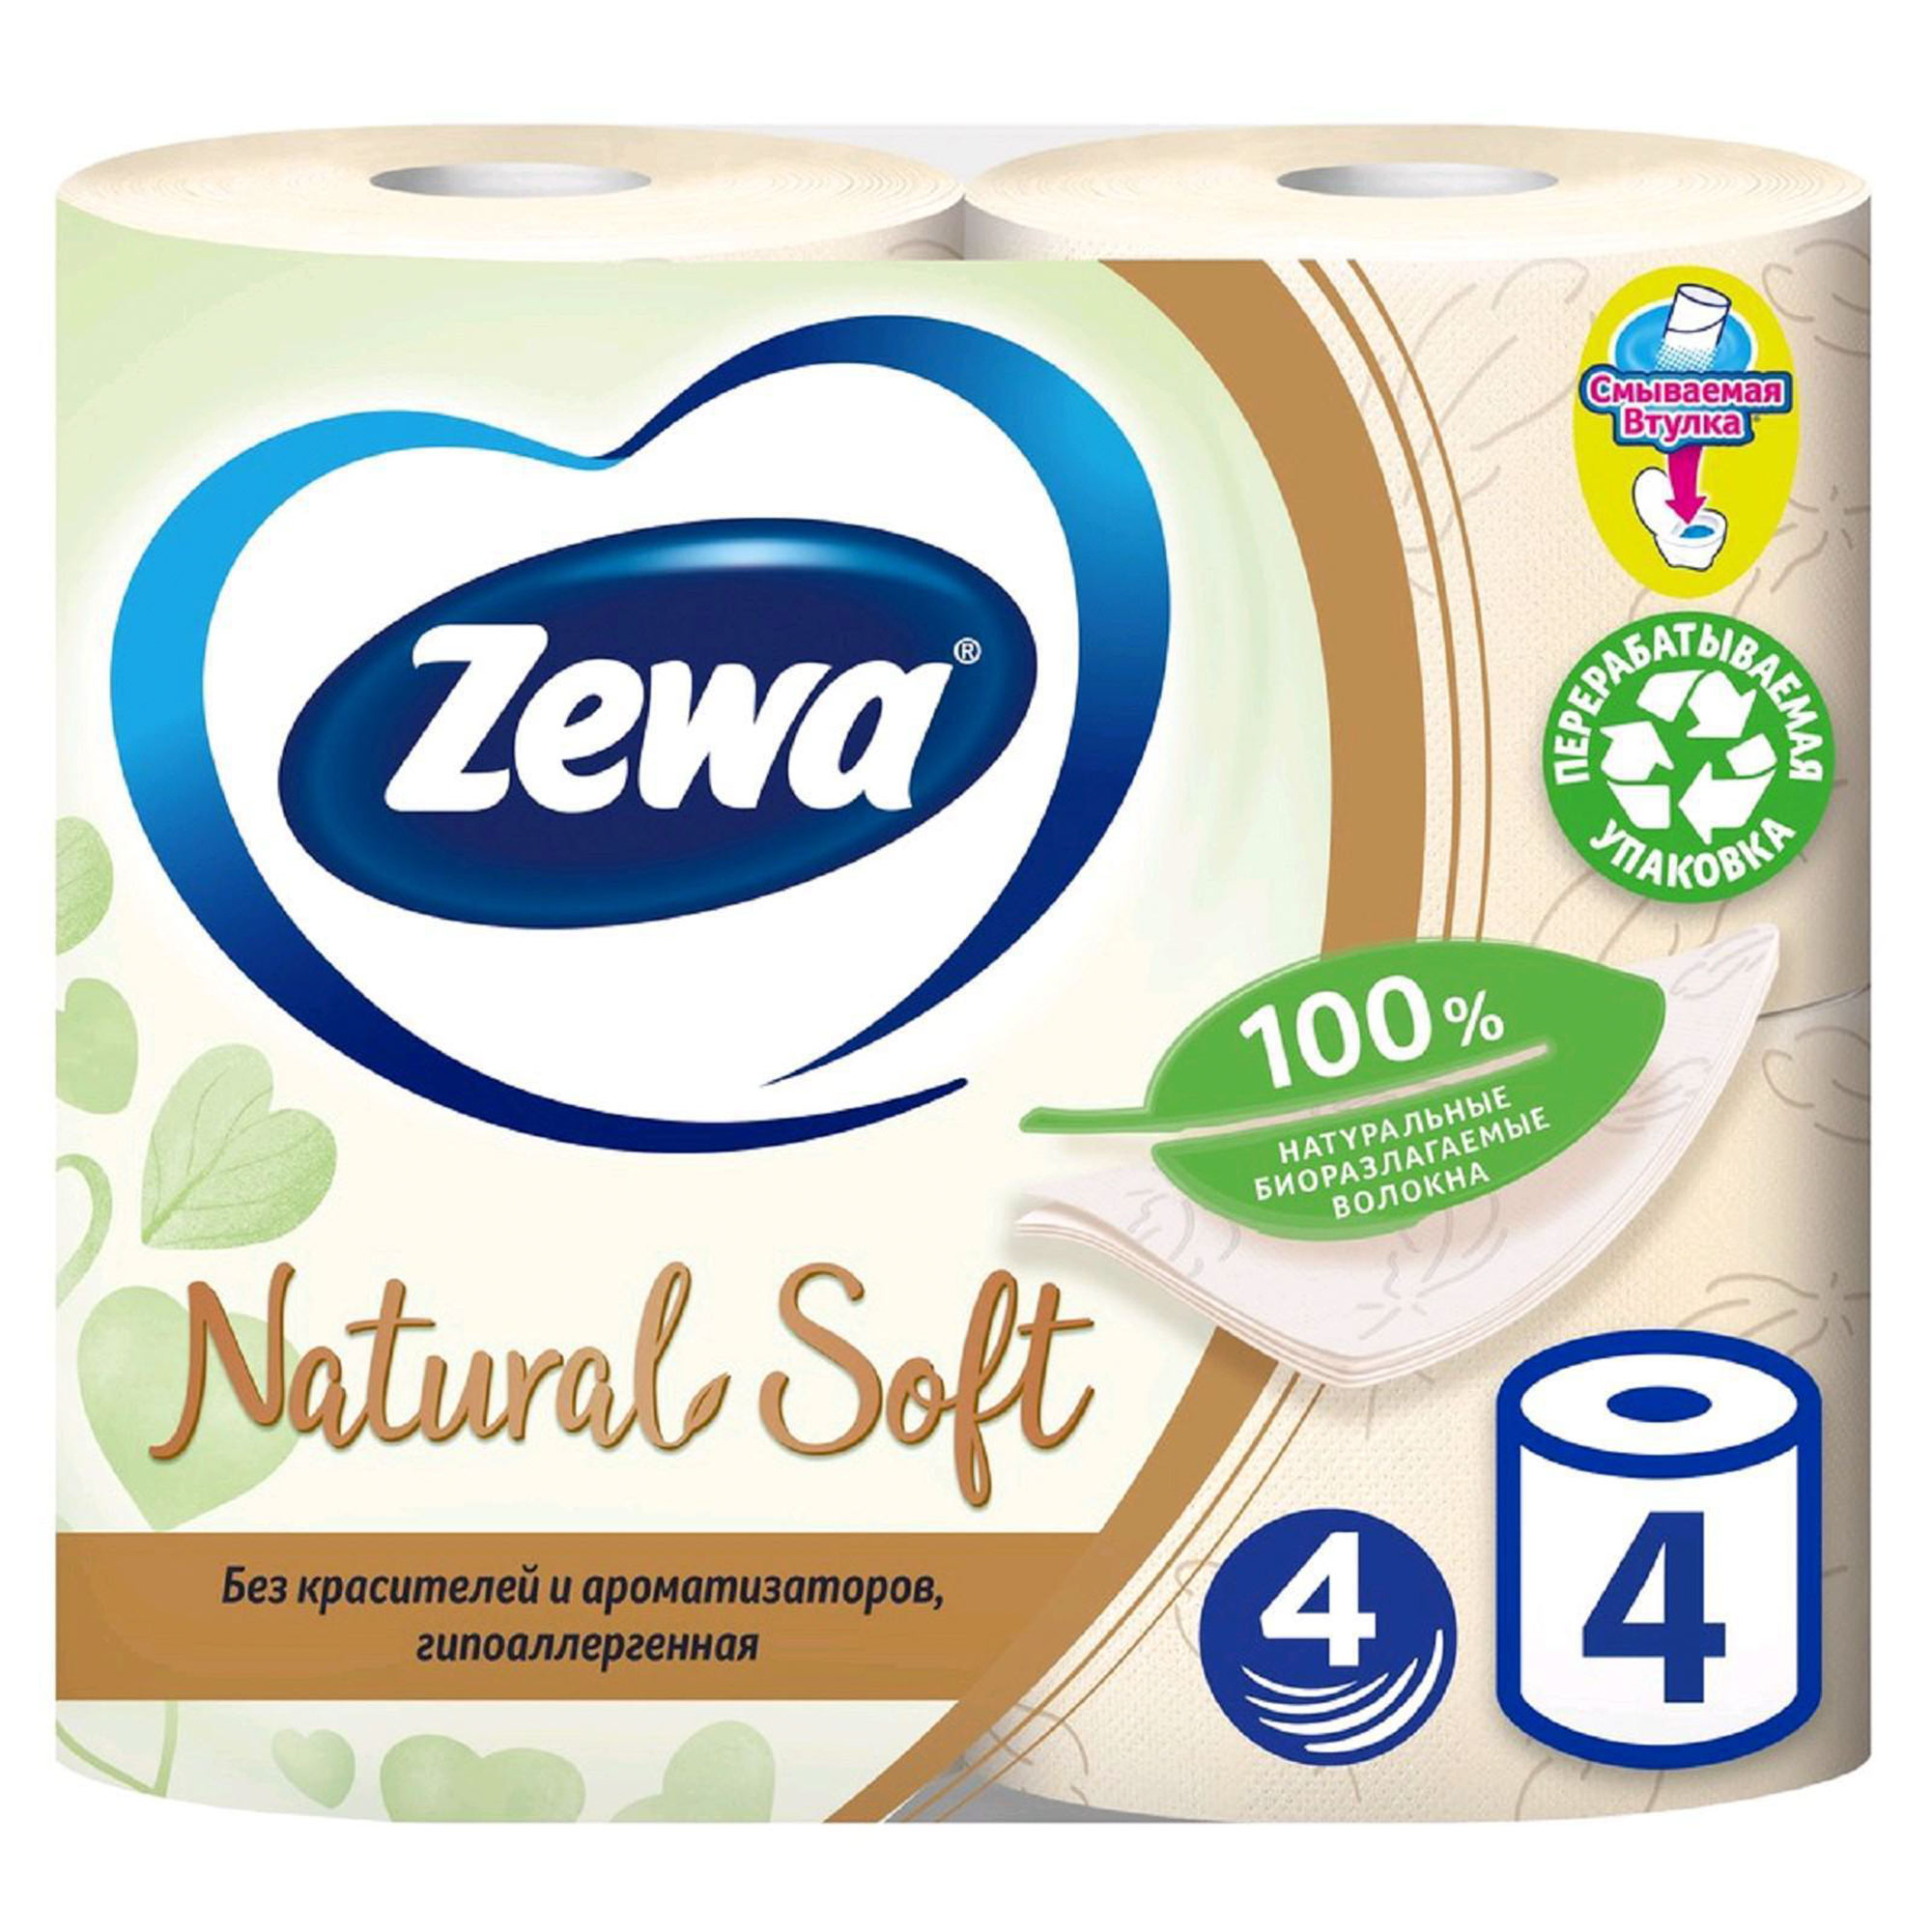 Туалетная бумага Zewa Natural Soft четырехслойная 4 шт